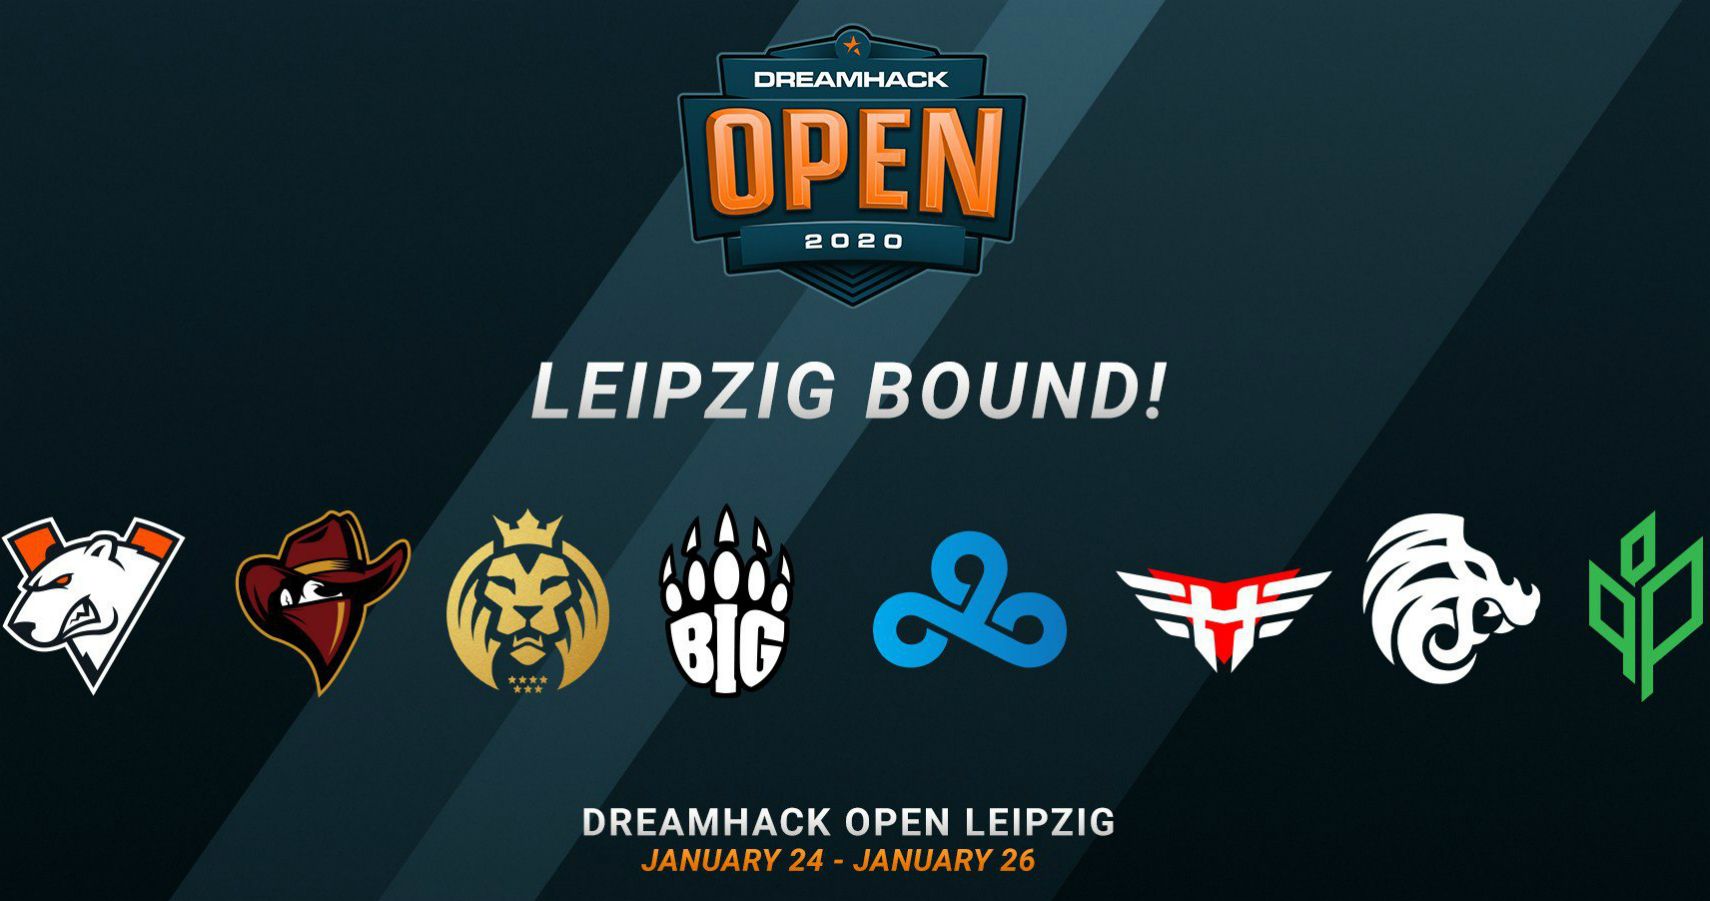 Promotional material for DreamHack Open Leipzig 2020